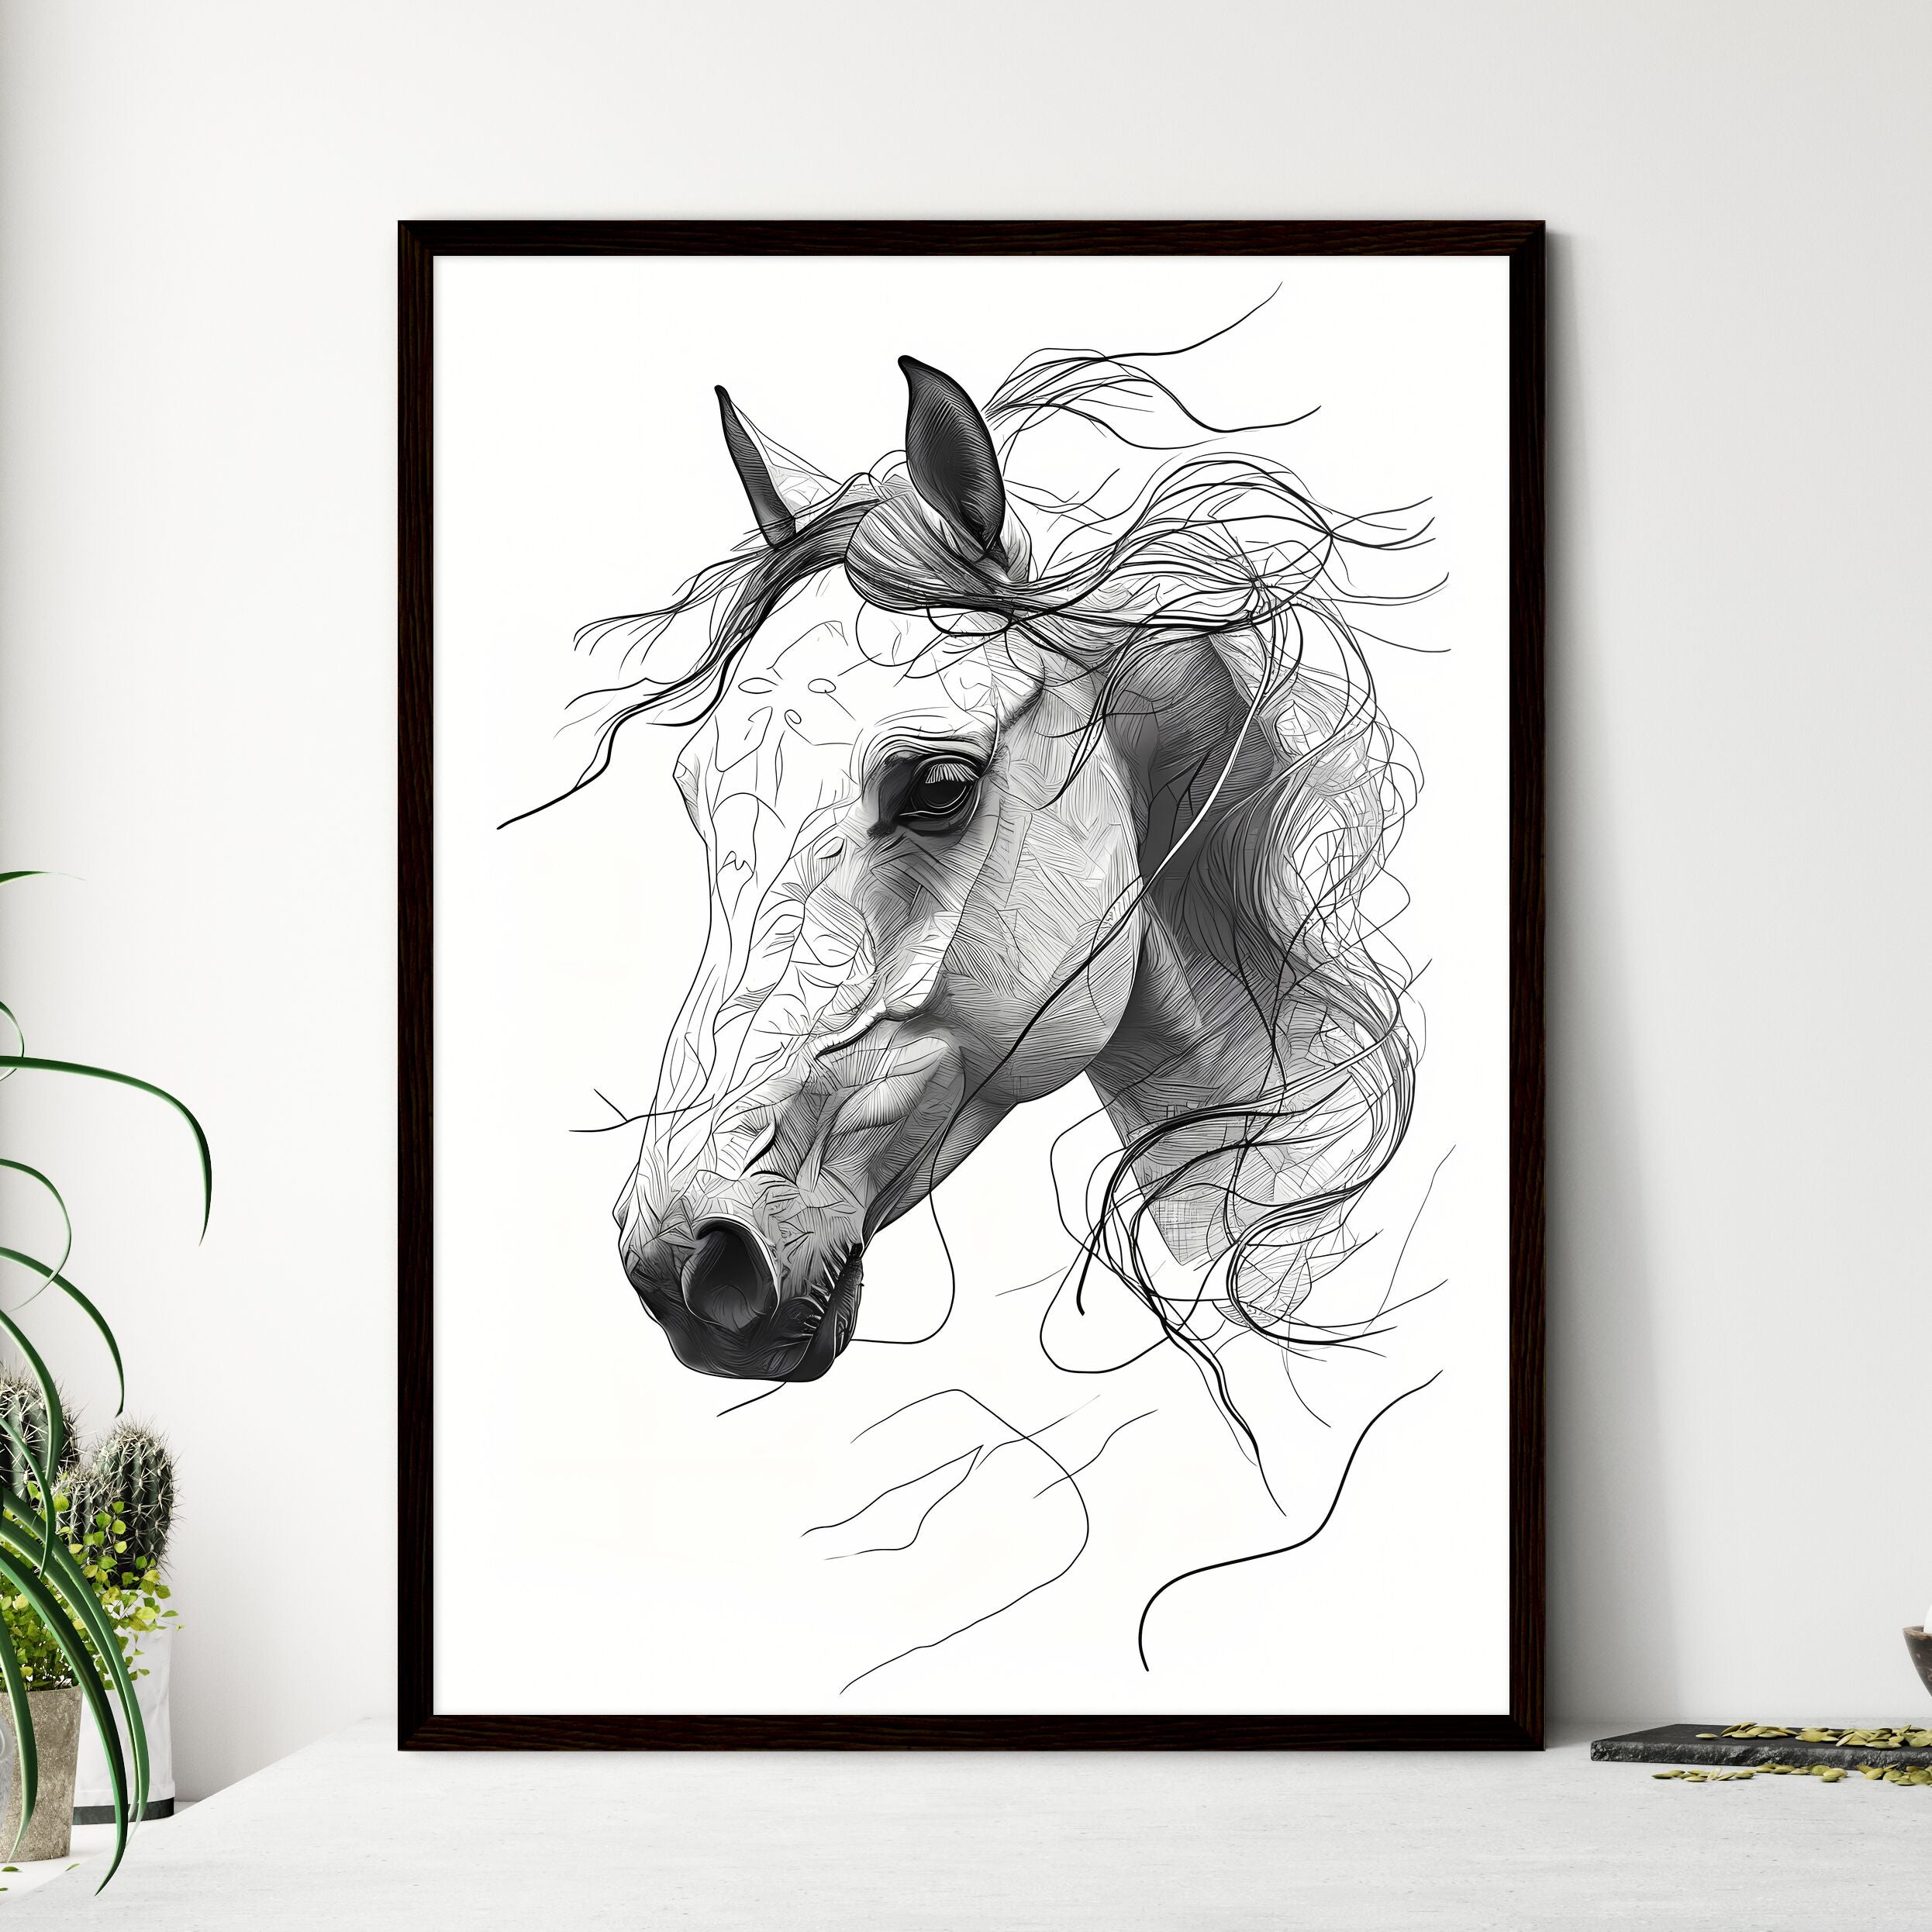 Pencil sketch | Horse art drawing, Horse drawings, Horse drawing